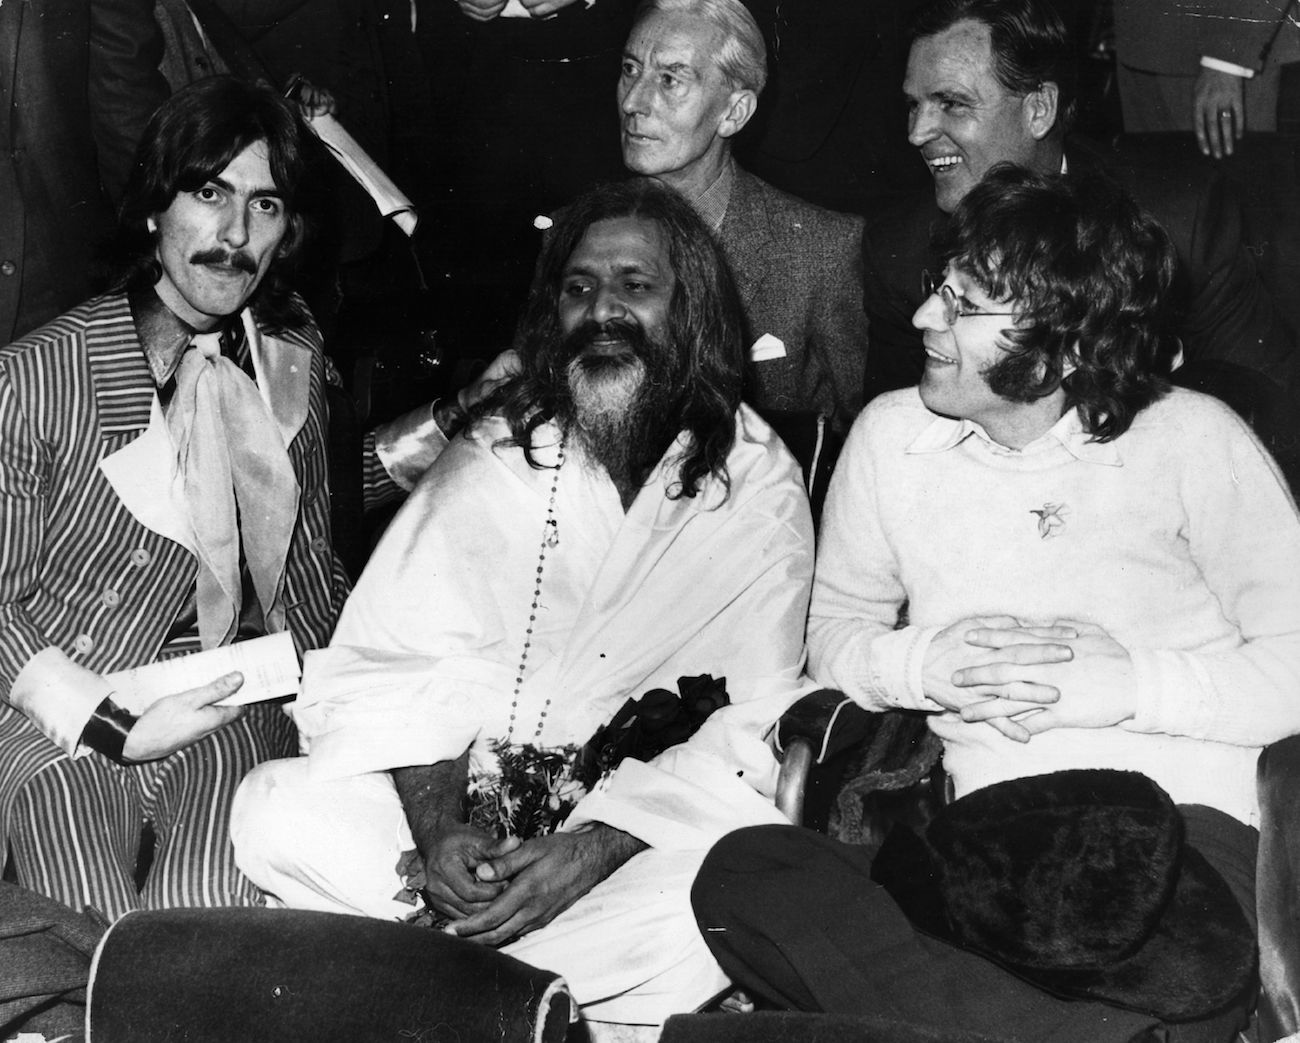 George Harrison, Maharishi Mahesh Yogi, and John Lennon at the UNICEF Gala in Paris in 1967.